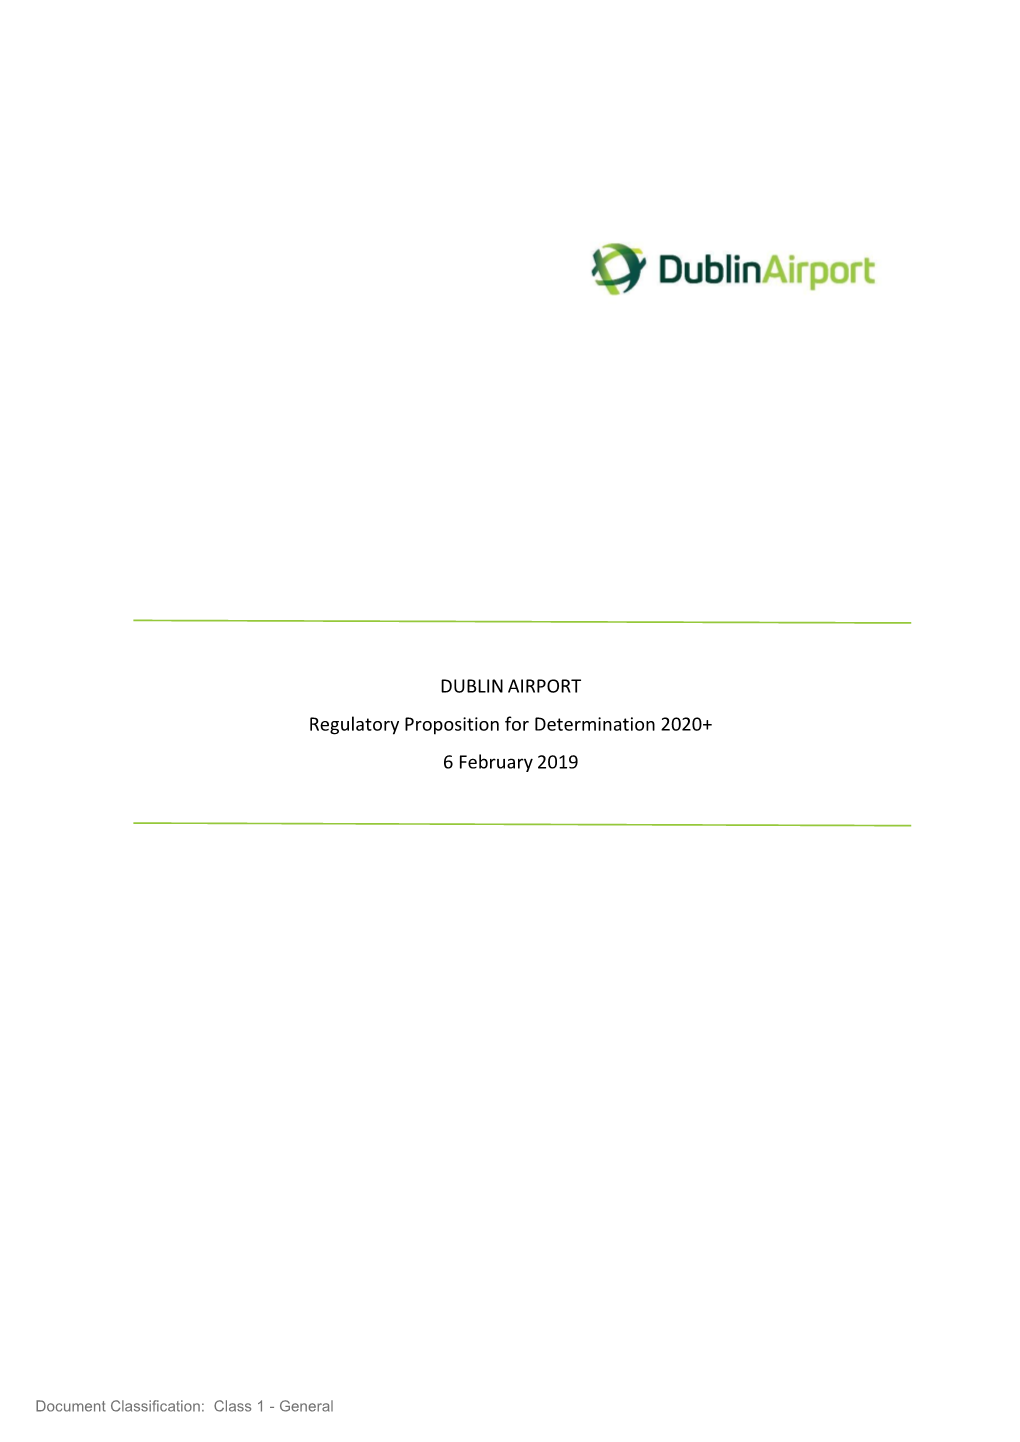 Dublin Airport's Regulatory Proposition